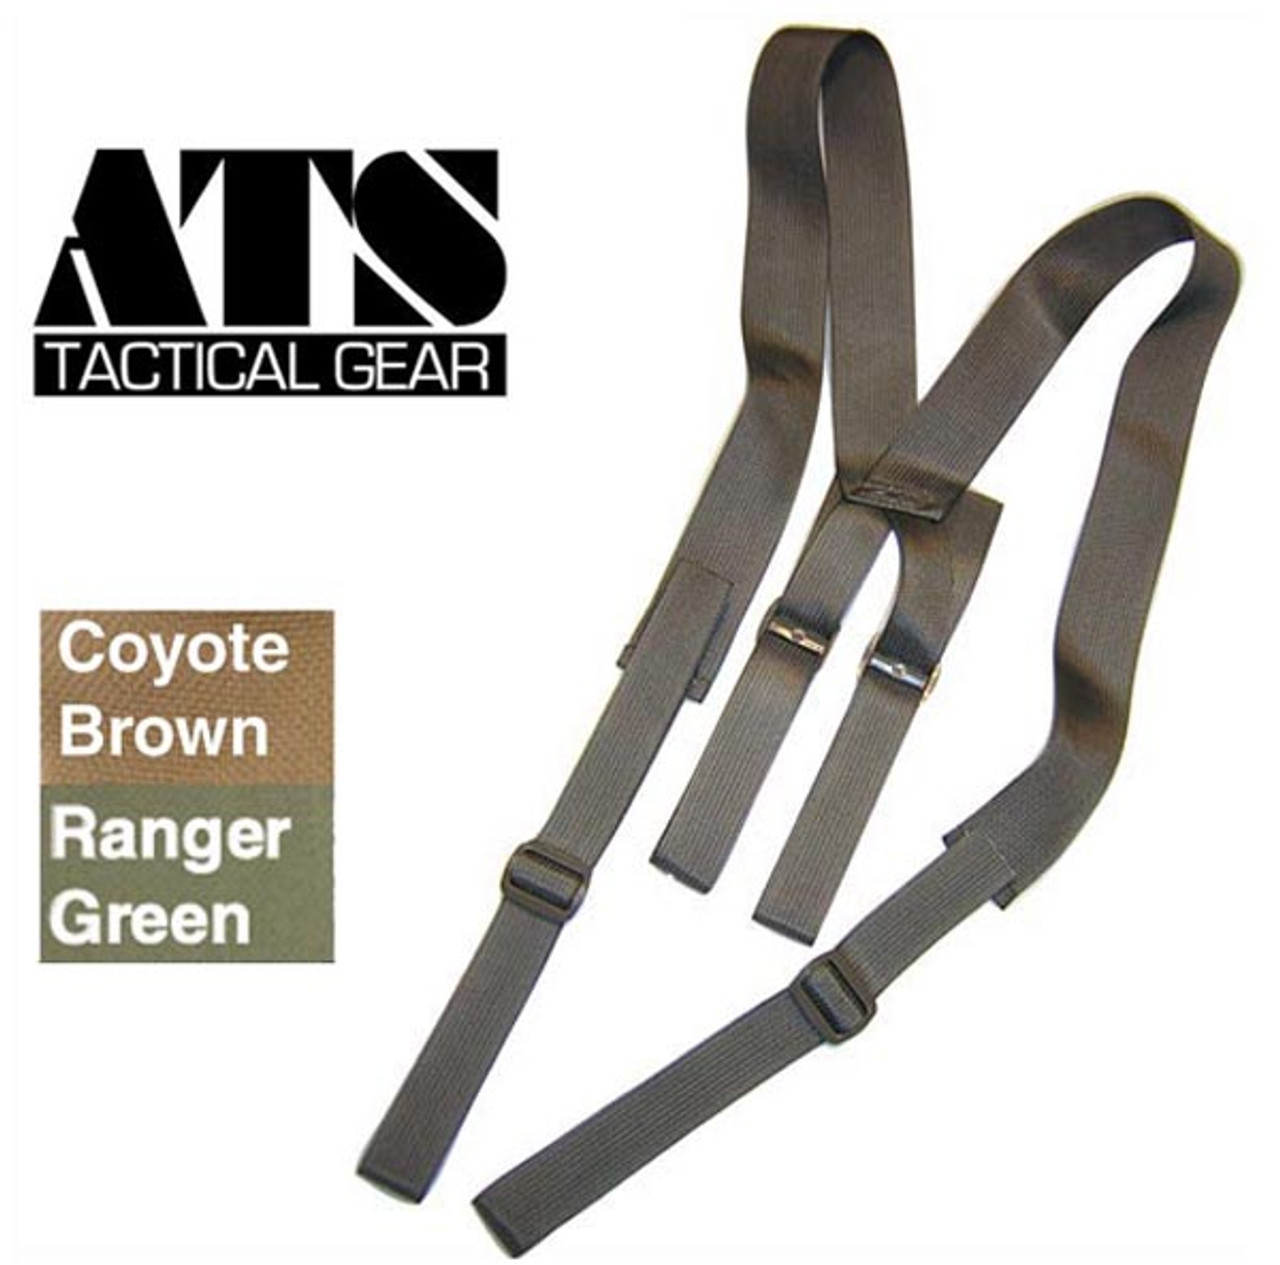 ATS Tactical Gear Suspenders - War Belt